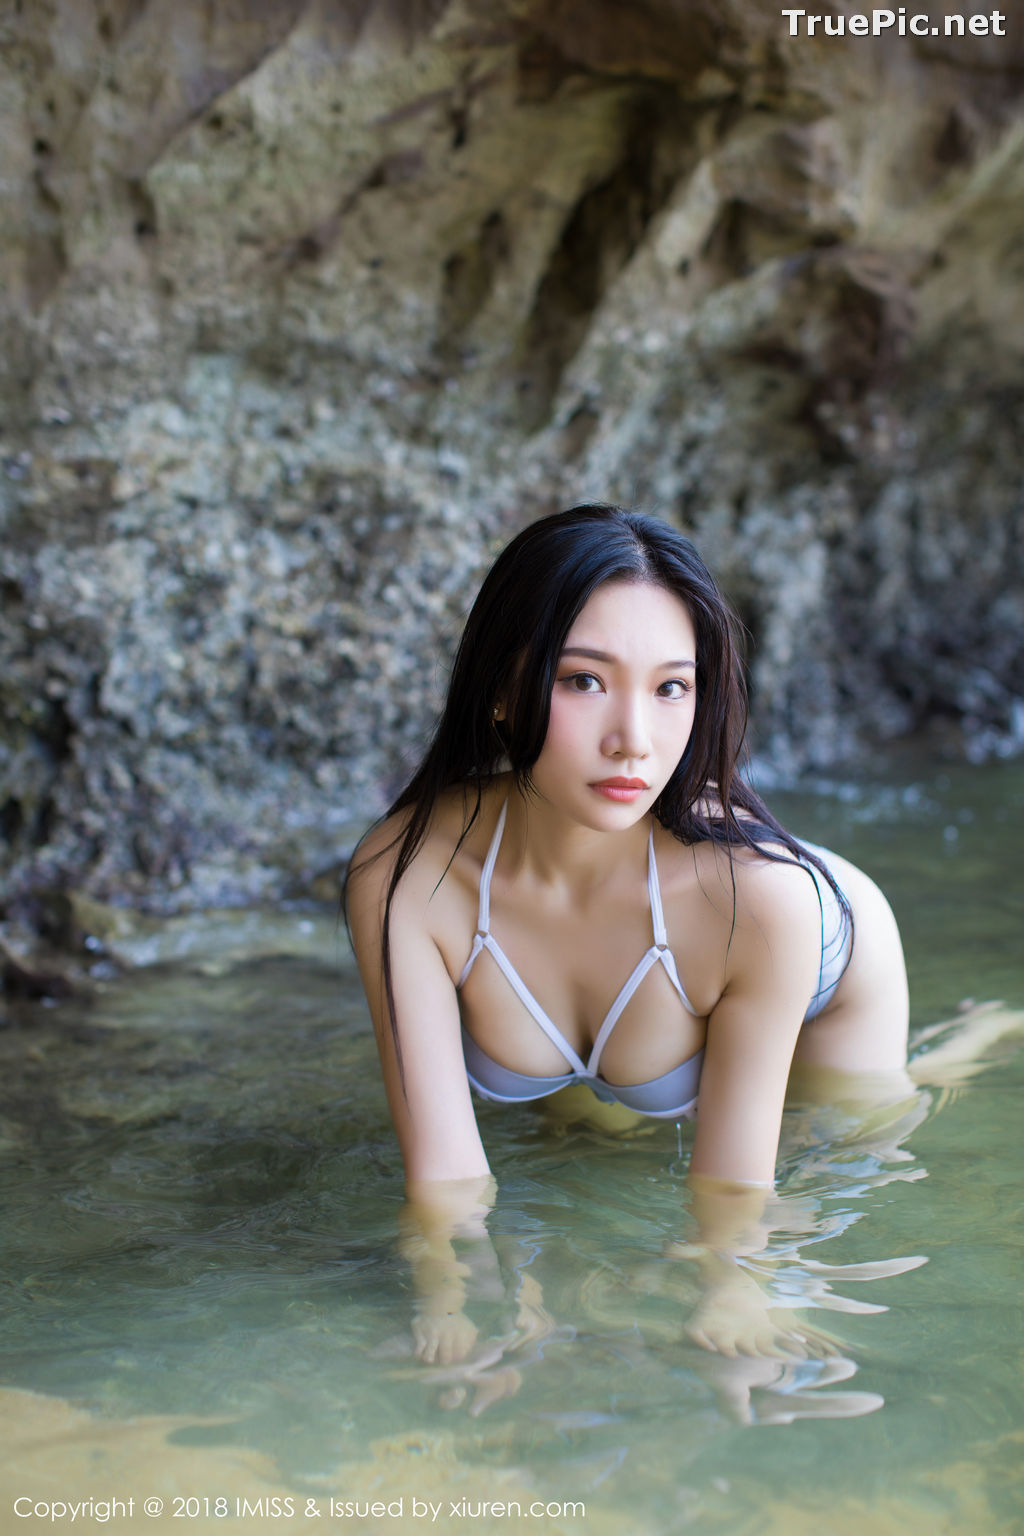 Image IMISS Vol.227 - Chinese Model Xiao Hu Li (小狐狸Sica) - Bikini On the Beach - TruePic.net - Picture-37